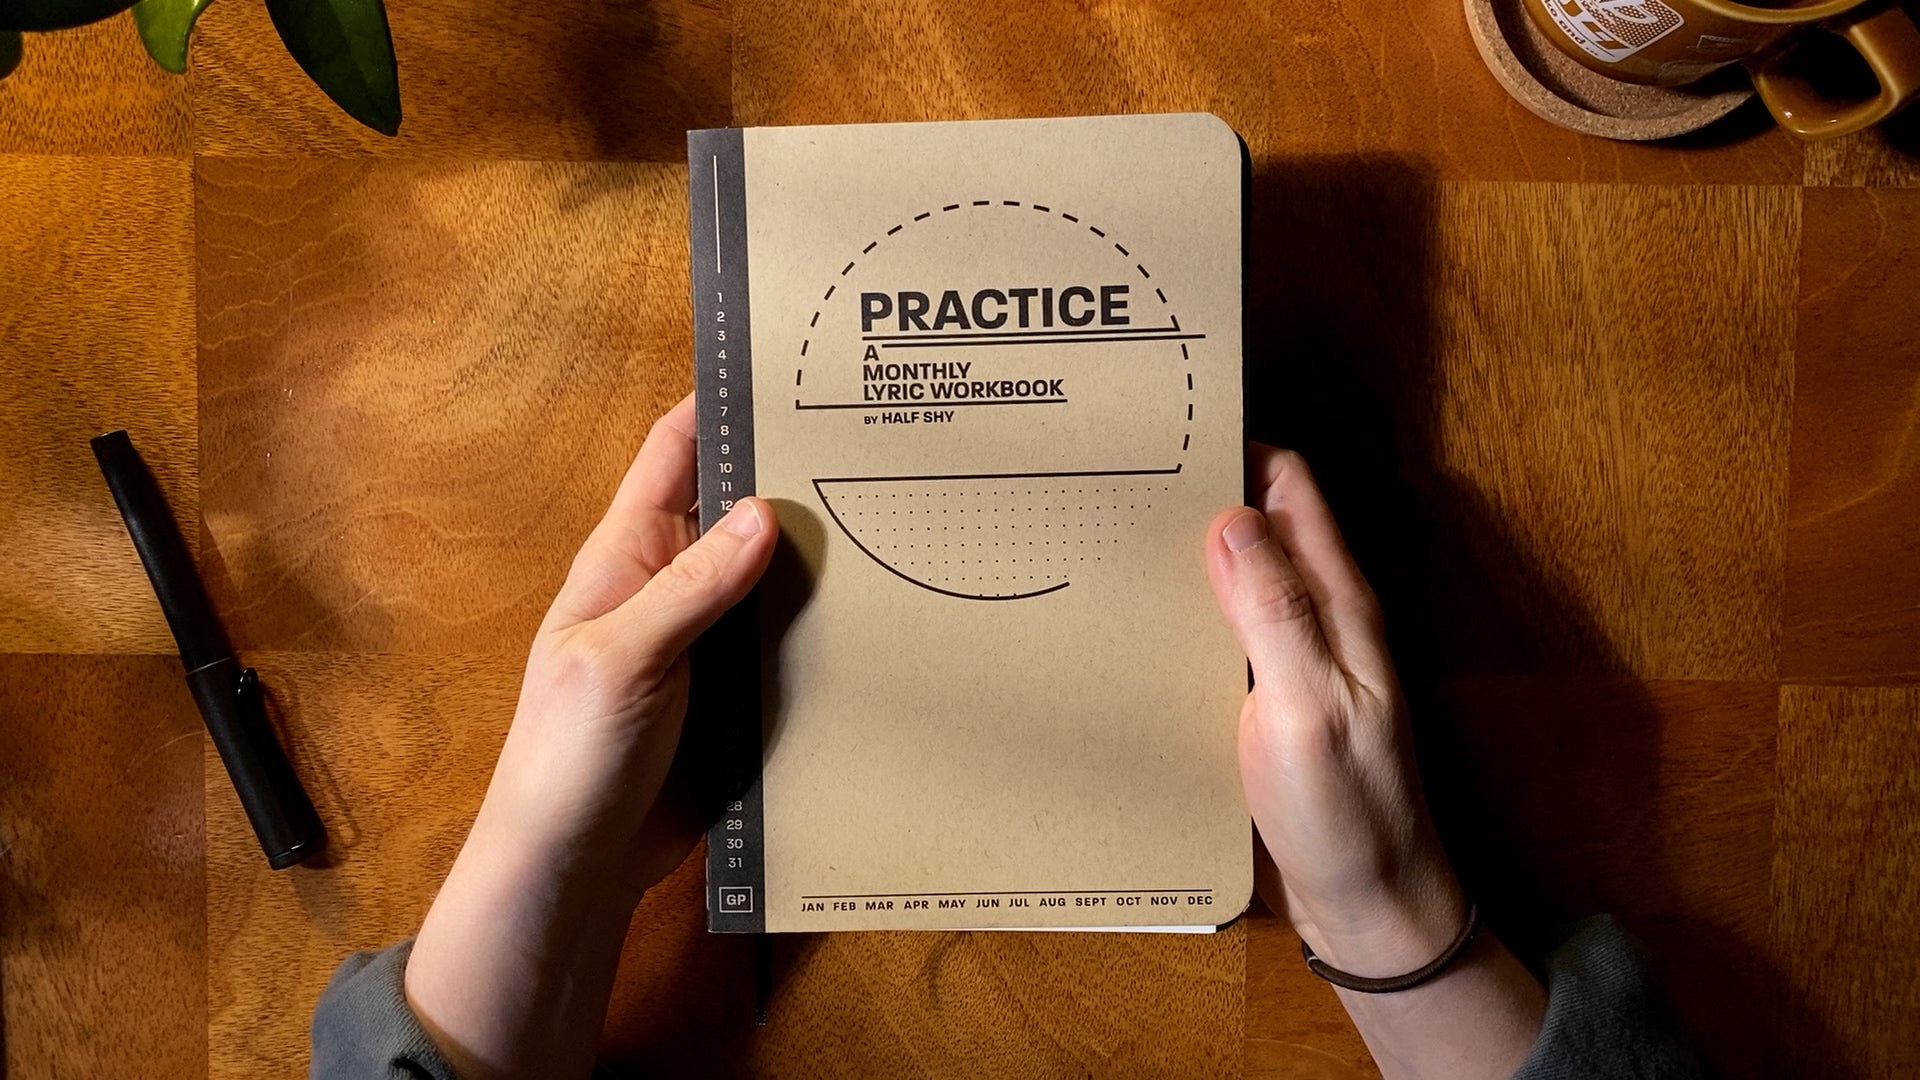 Practice Lyric Workbook cover held above a desk